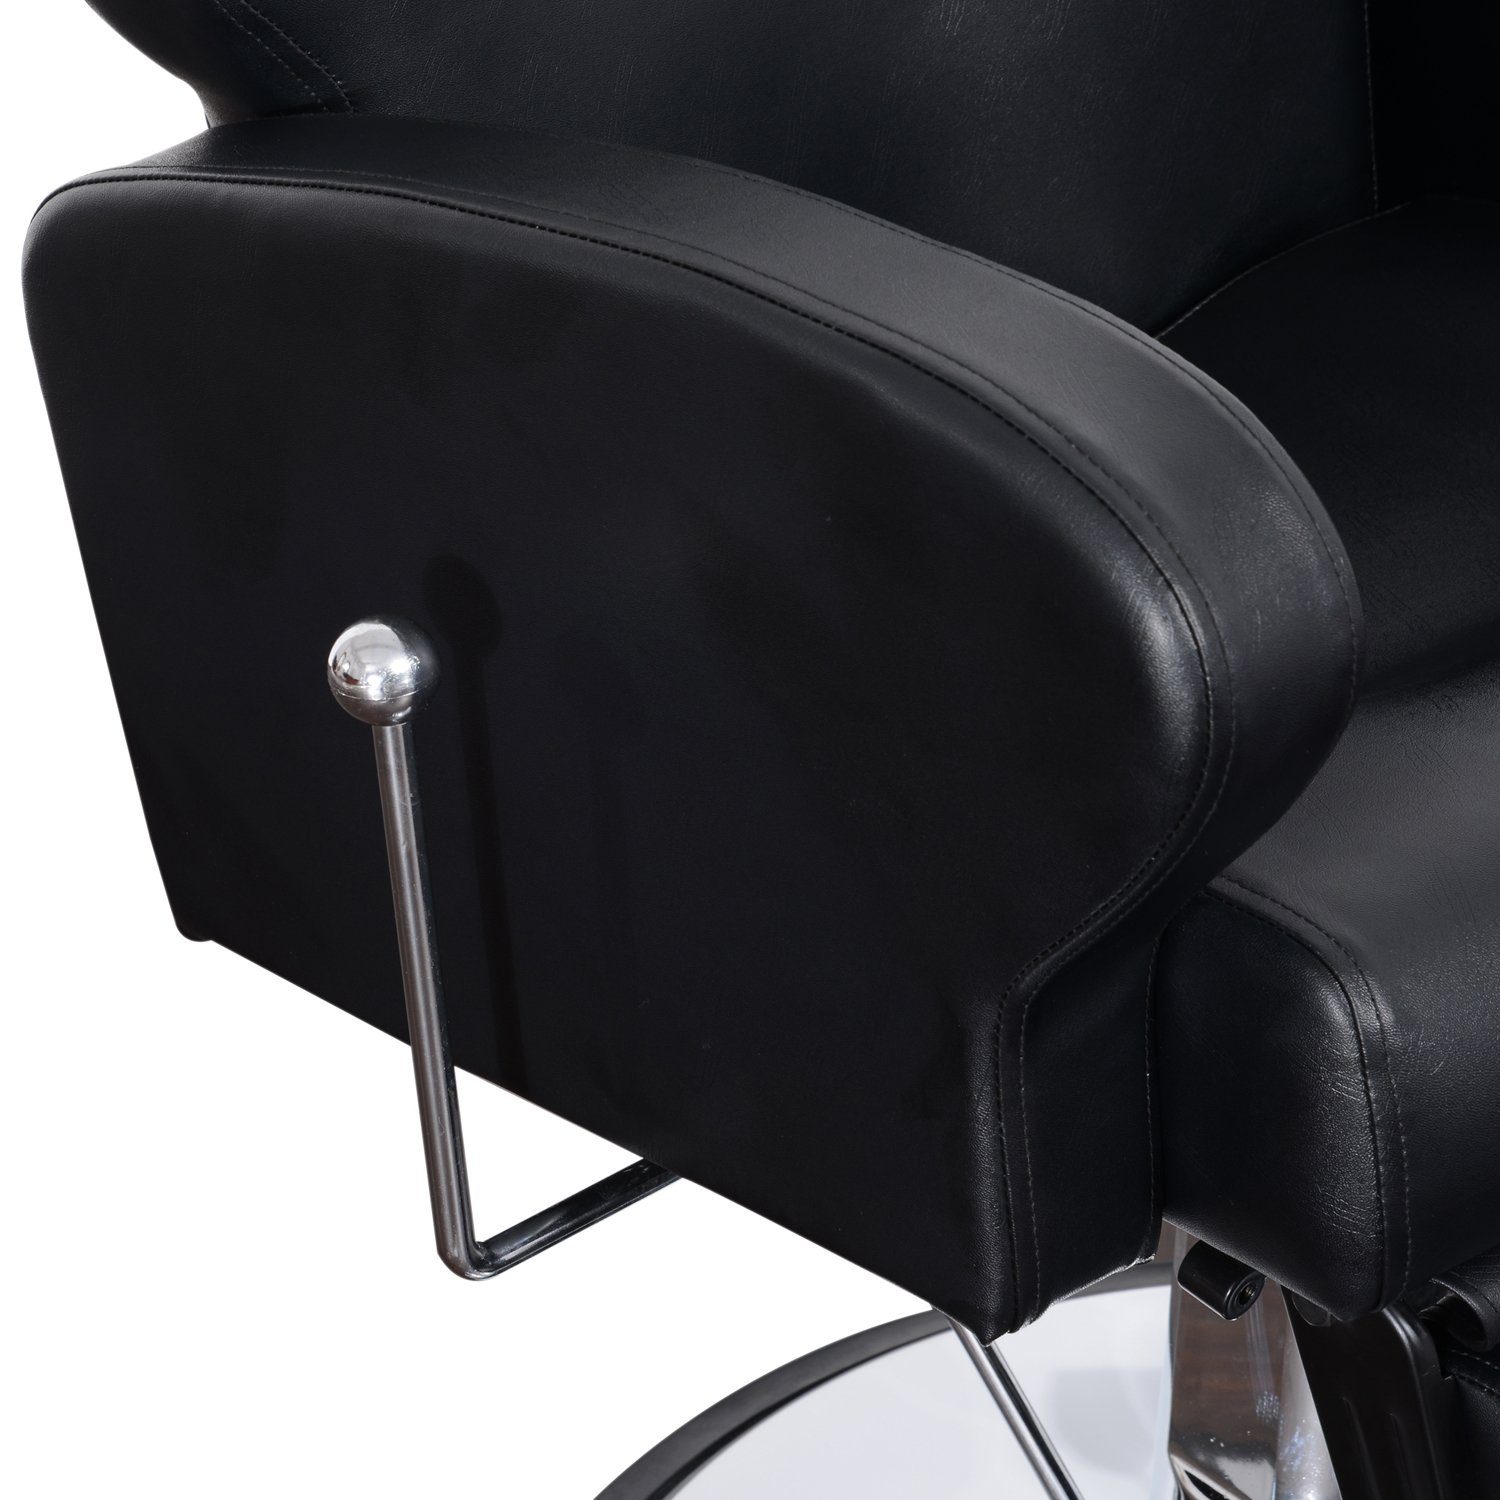 8907BK, Barberpub Friseurstuhl Höhenverstellbar hydraulischer Stuhl Friseursessel Friseureinrichtung Bedienungsstuhl Friseur, Barberpub